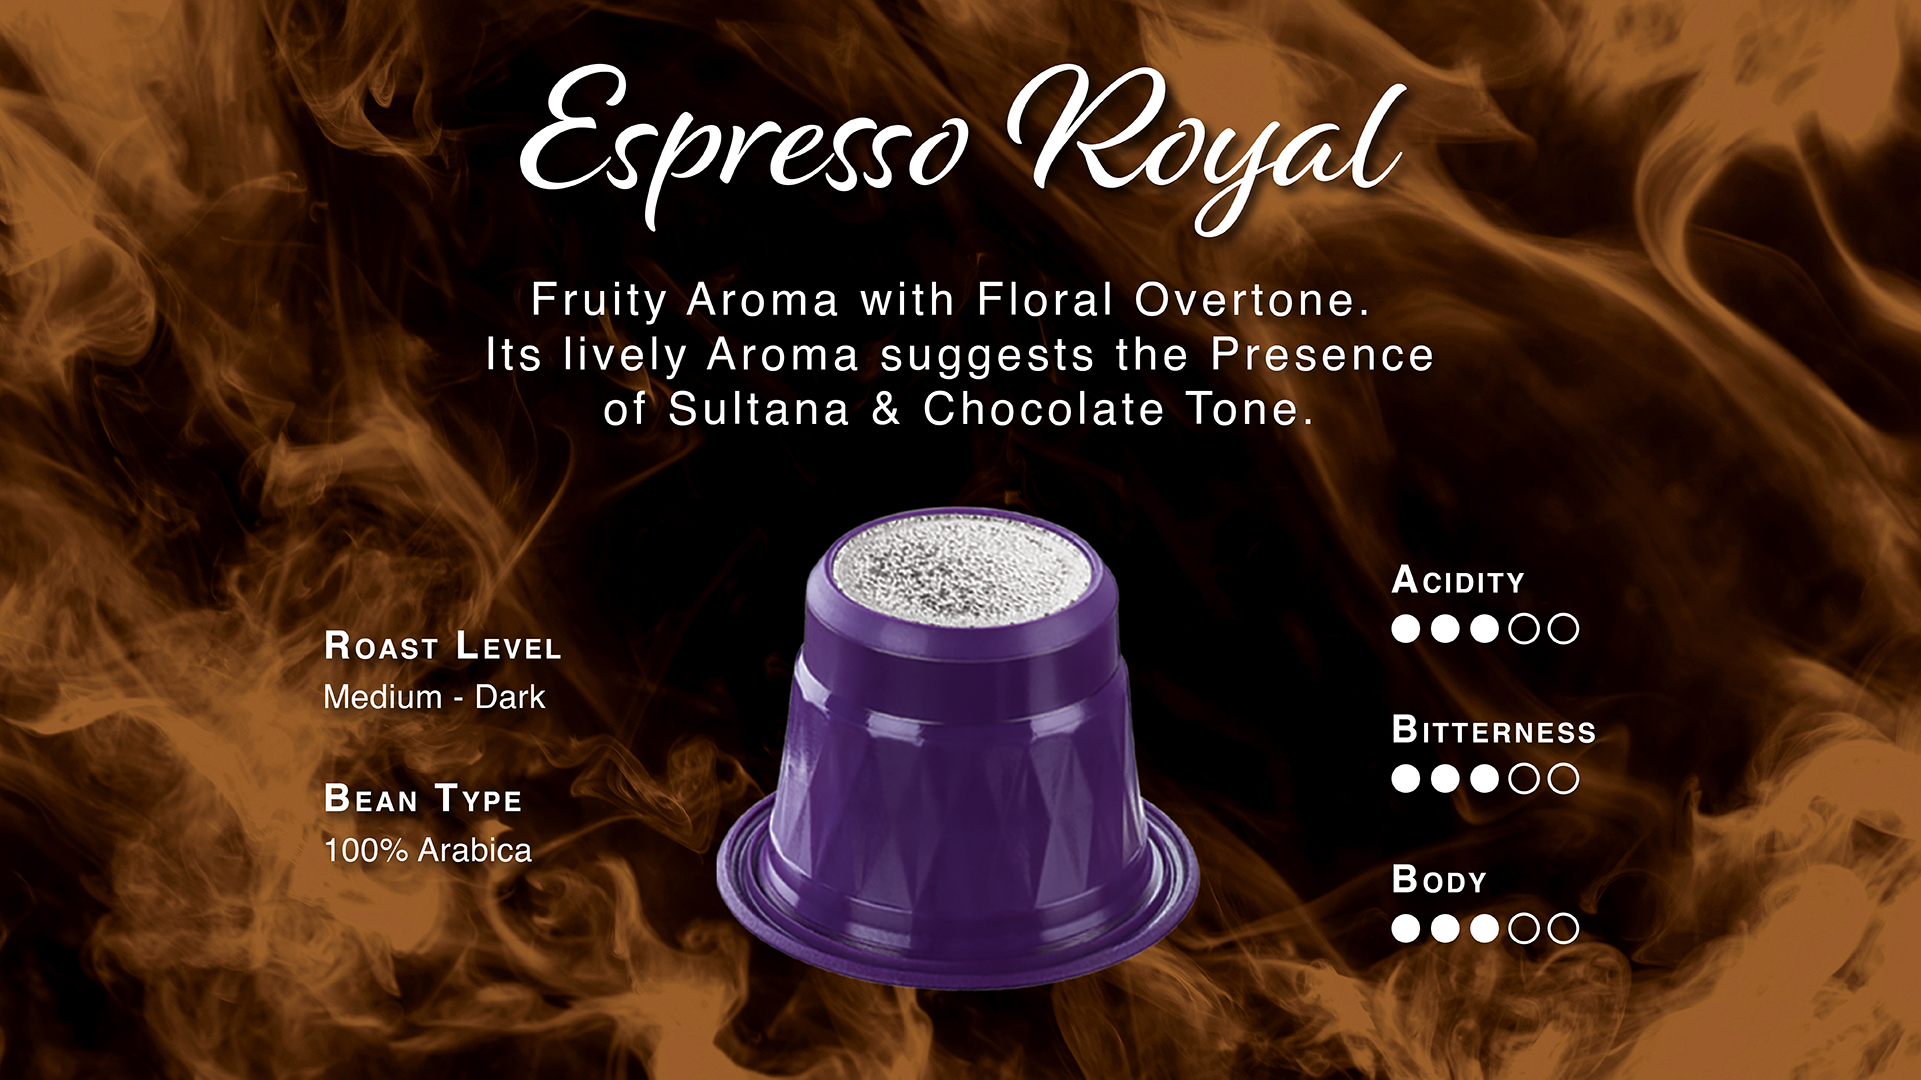 Capsule café Cafe Royal pro - 180 capsules compatibles nespresso